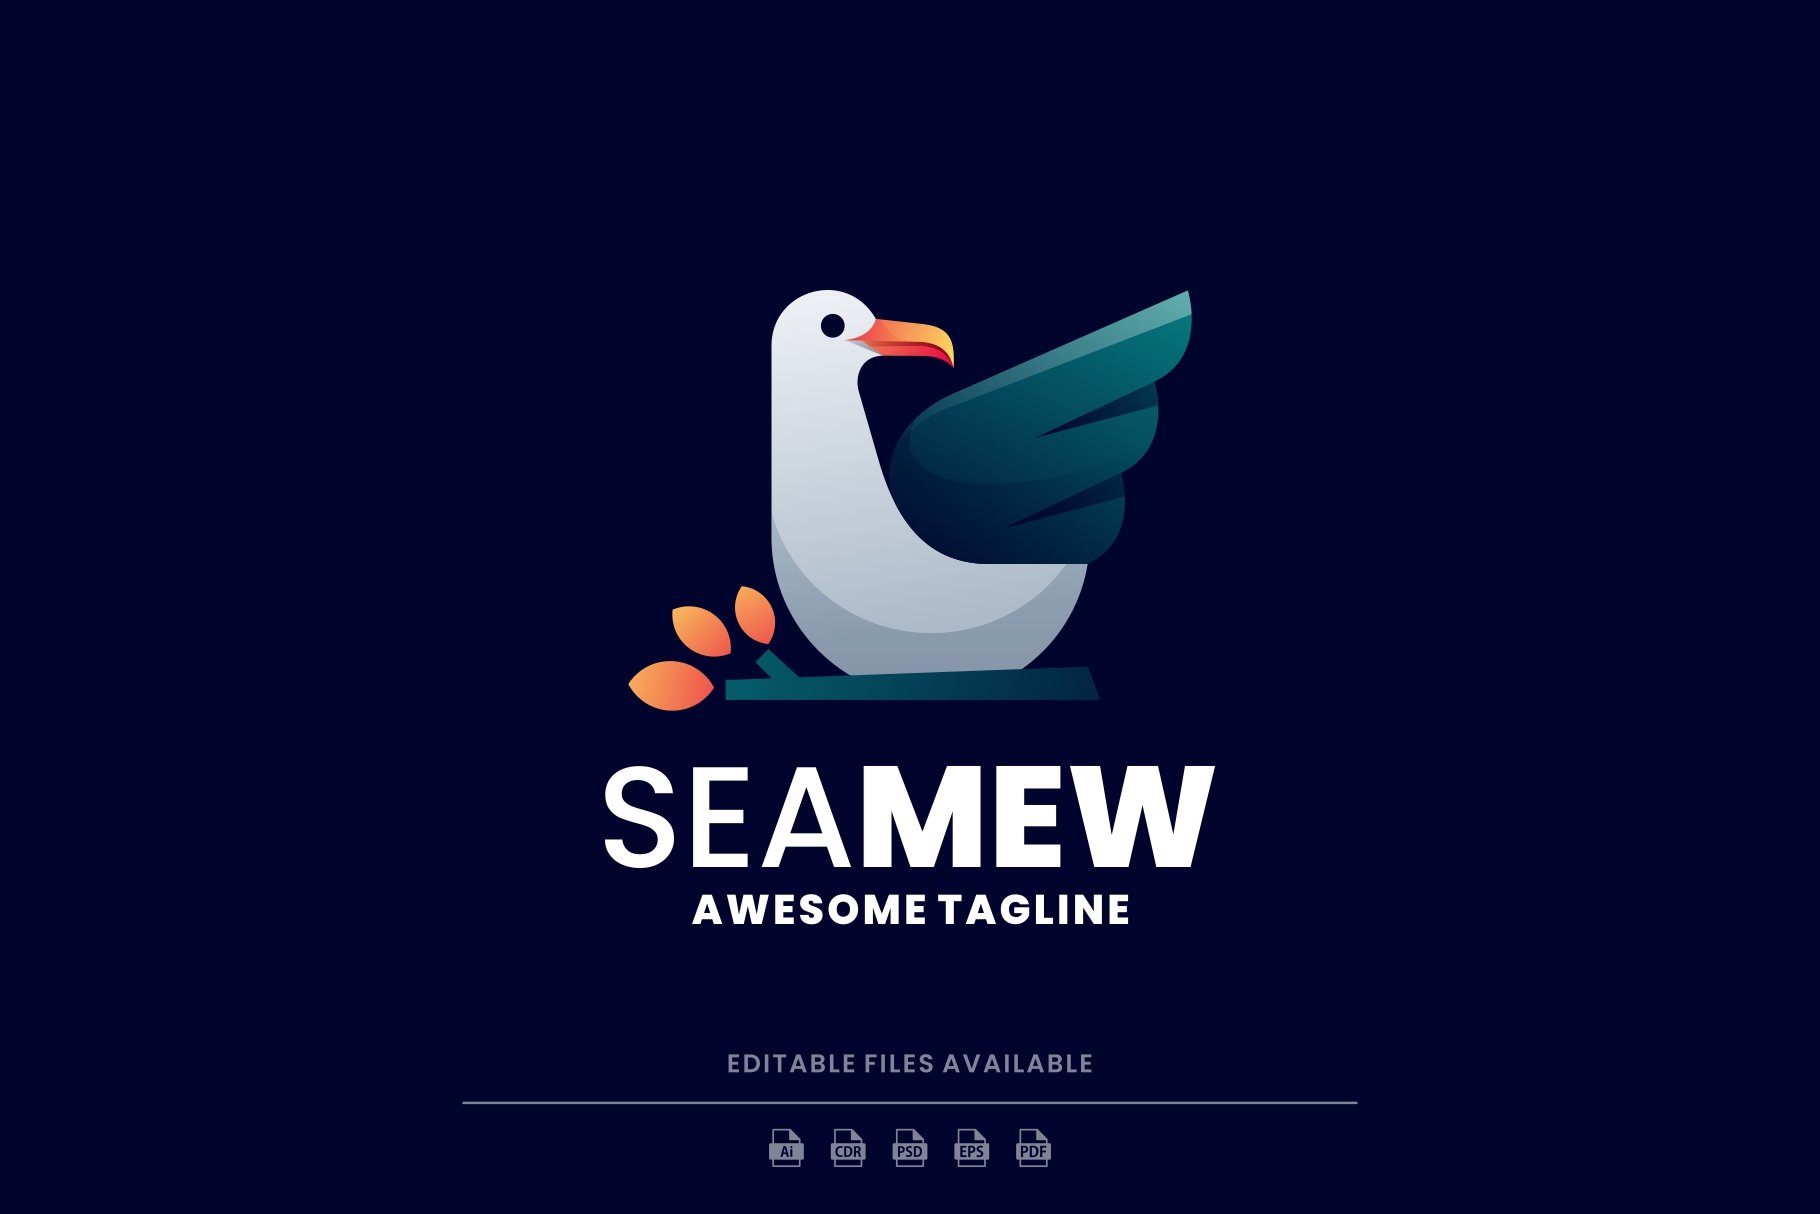 Seagull Colorful Logo cover image.